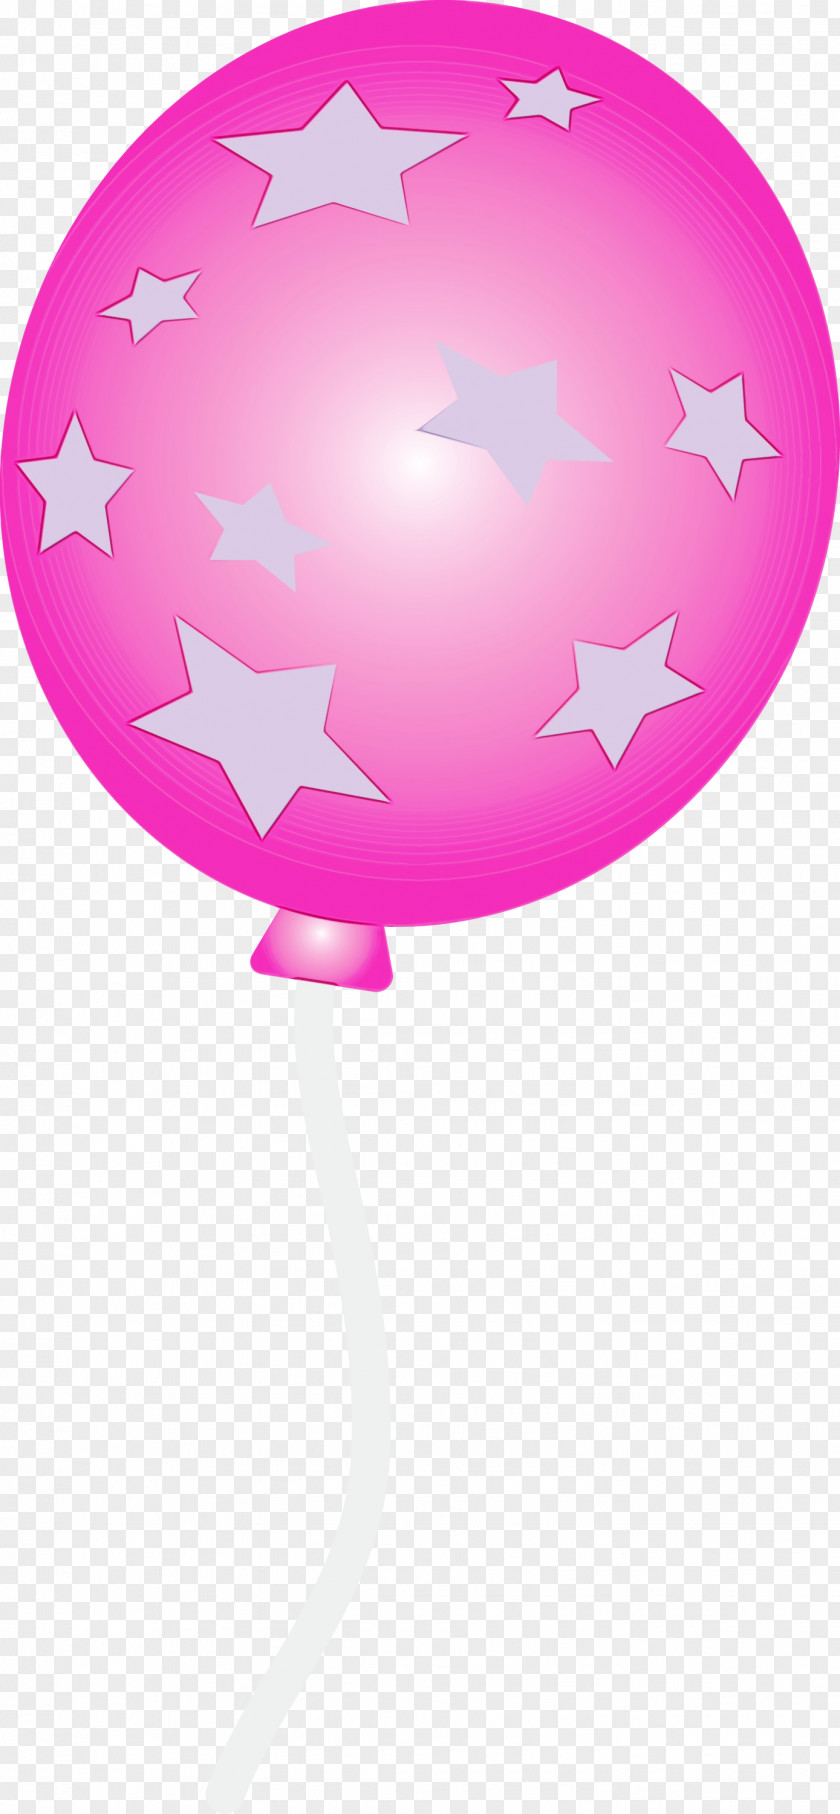 Balloon Pink Magenta Party Supply PNG